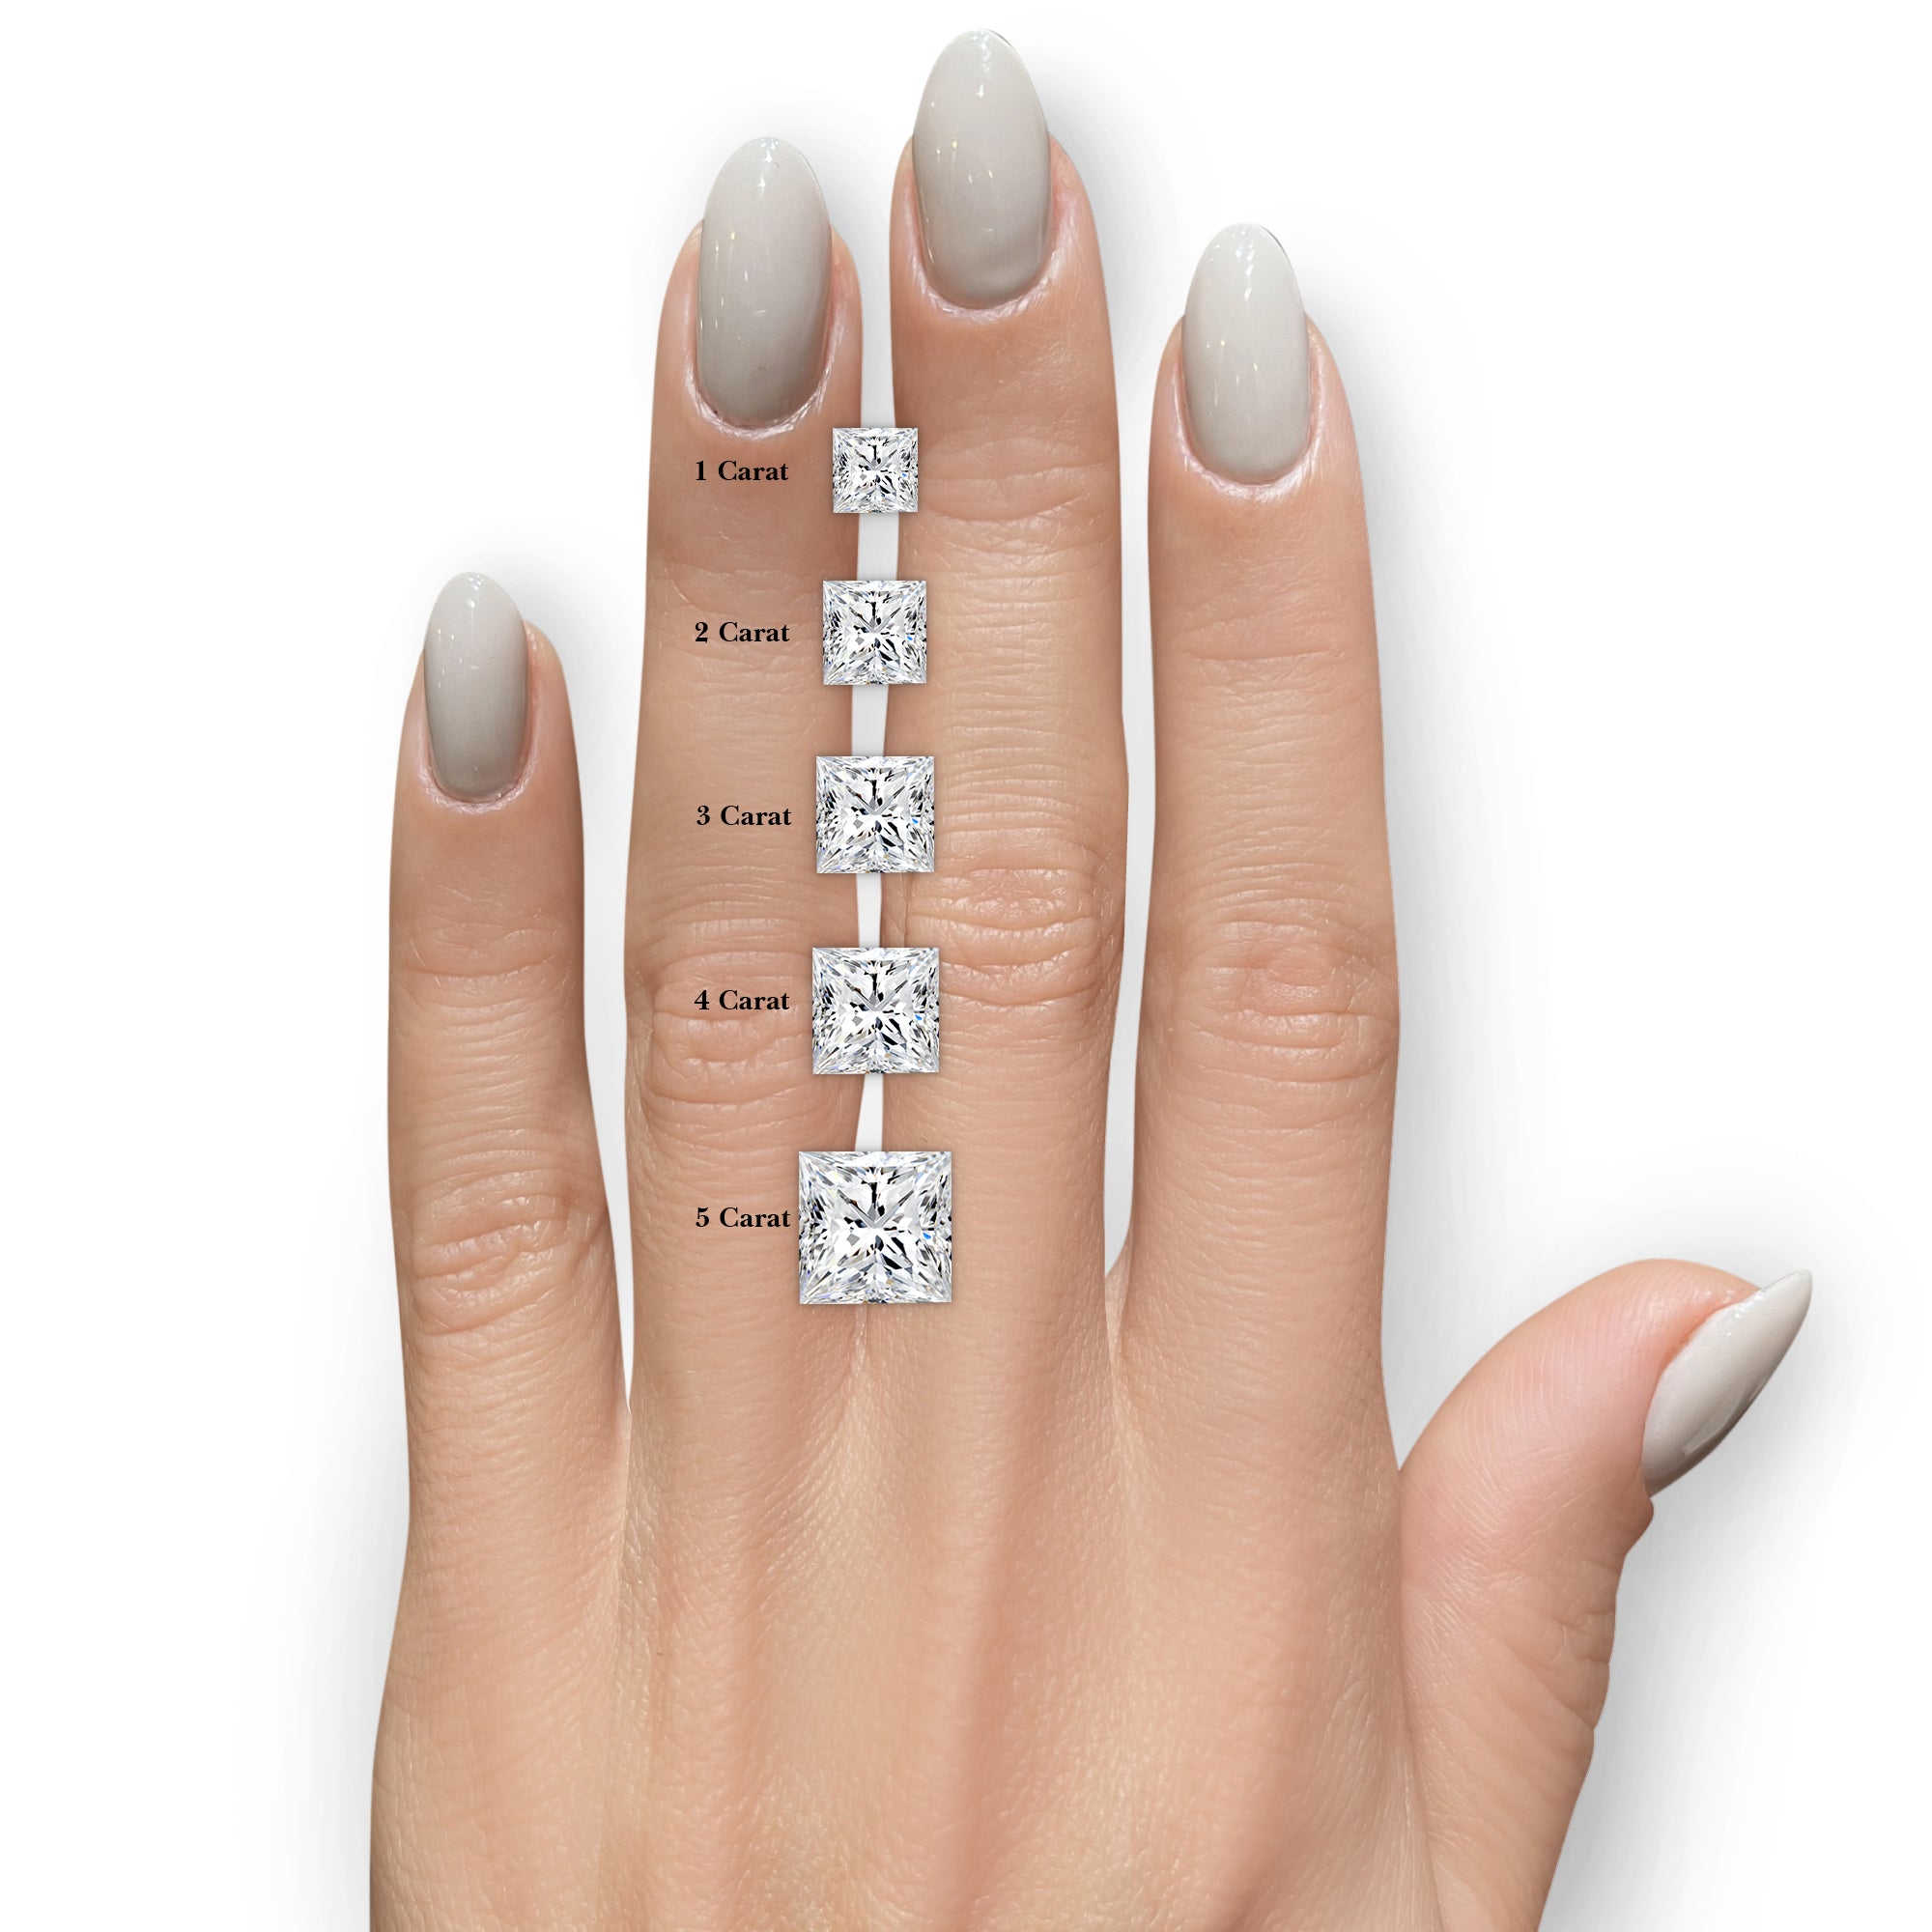 Alexandria Diamond Engagement Ring -14K Rose Gold